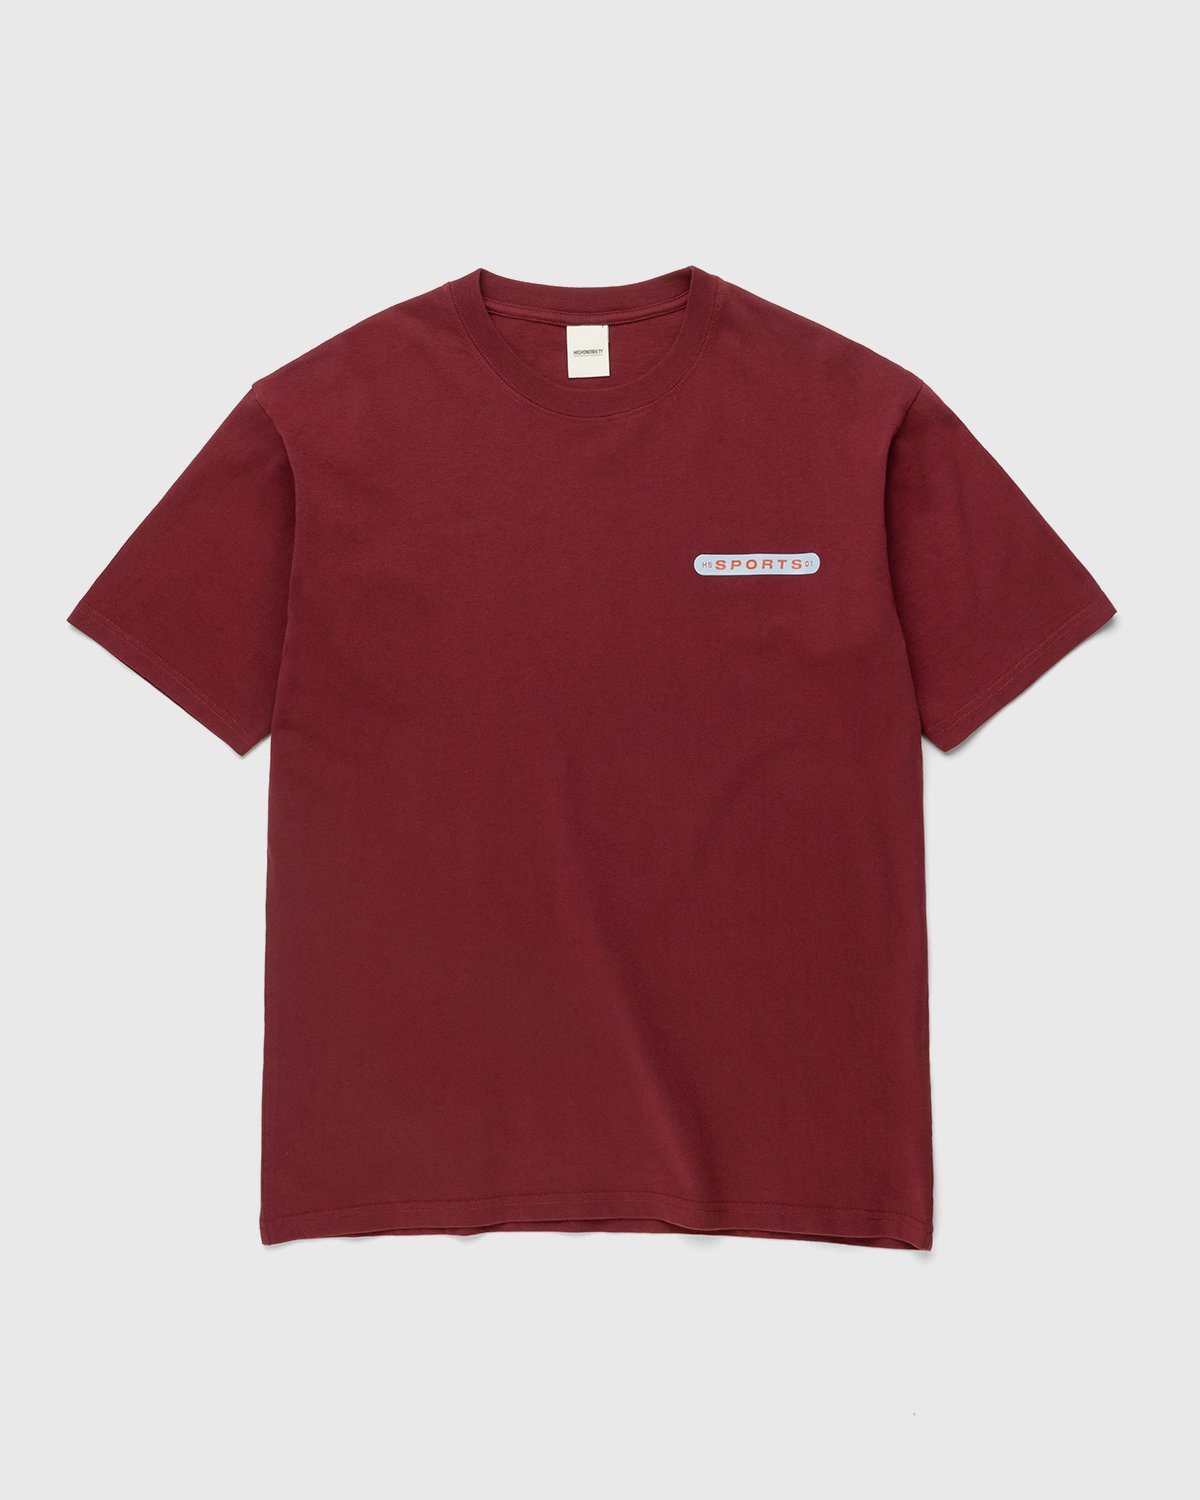 Highsnobiety - HS Sports Round 01 T-Shirt Burgundy - Clothing - Red - Image 2